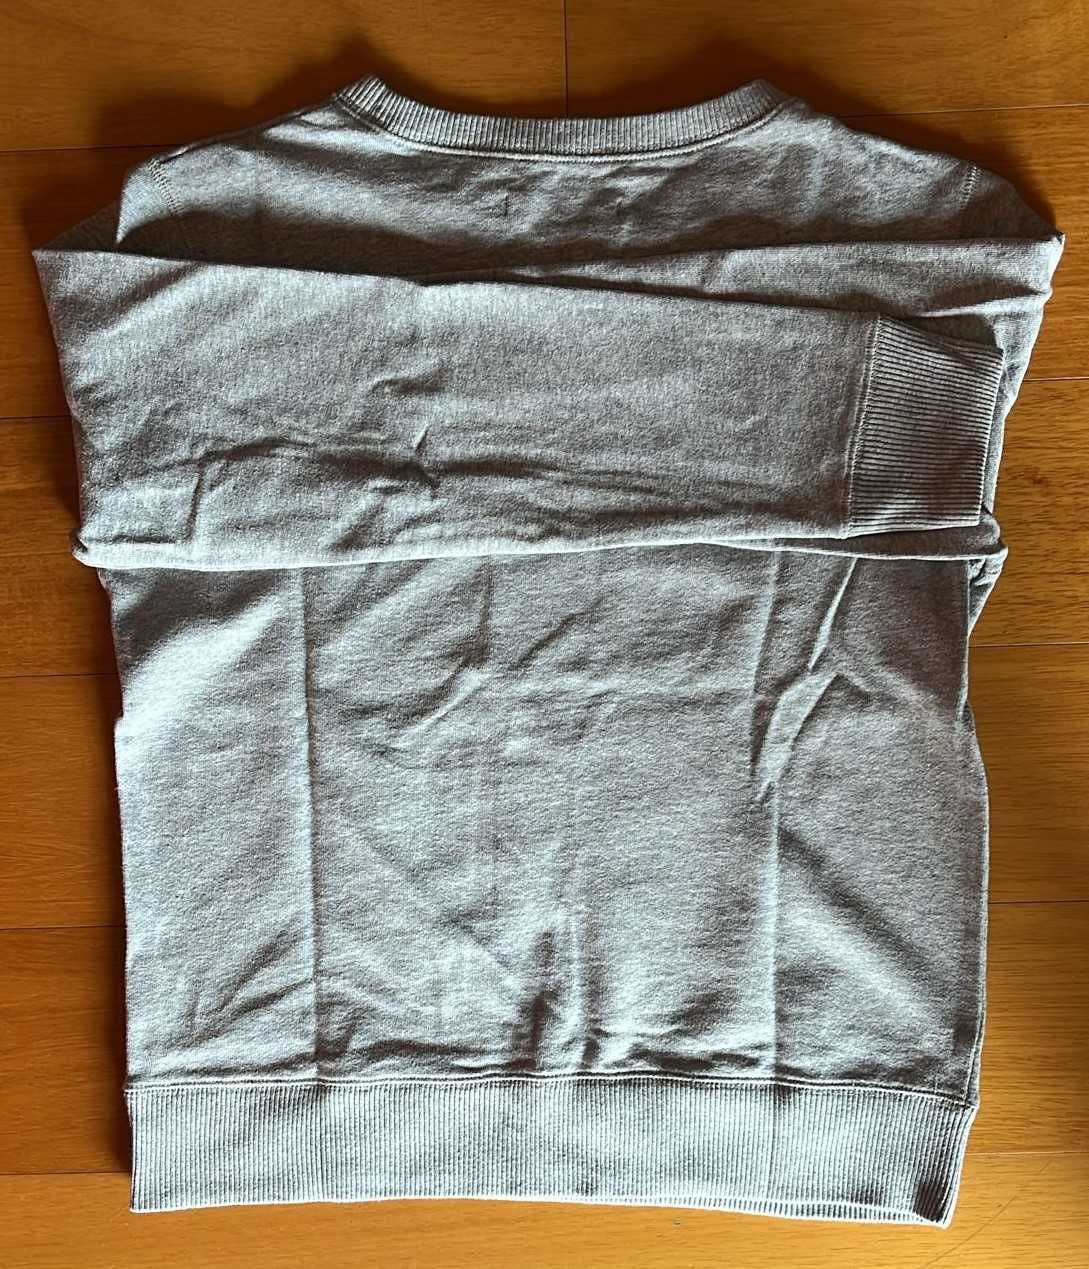 Camisola manga comprida - Senhora - Tamanho XS - Cinzenta